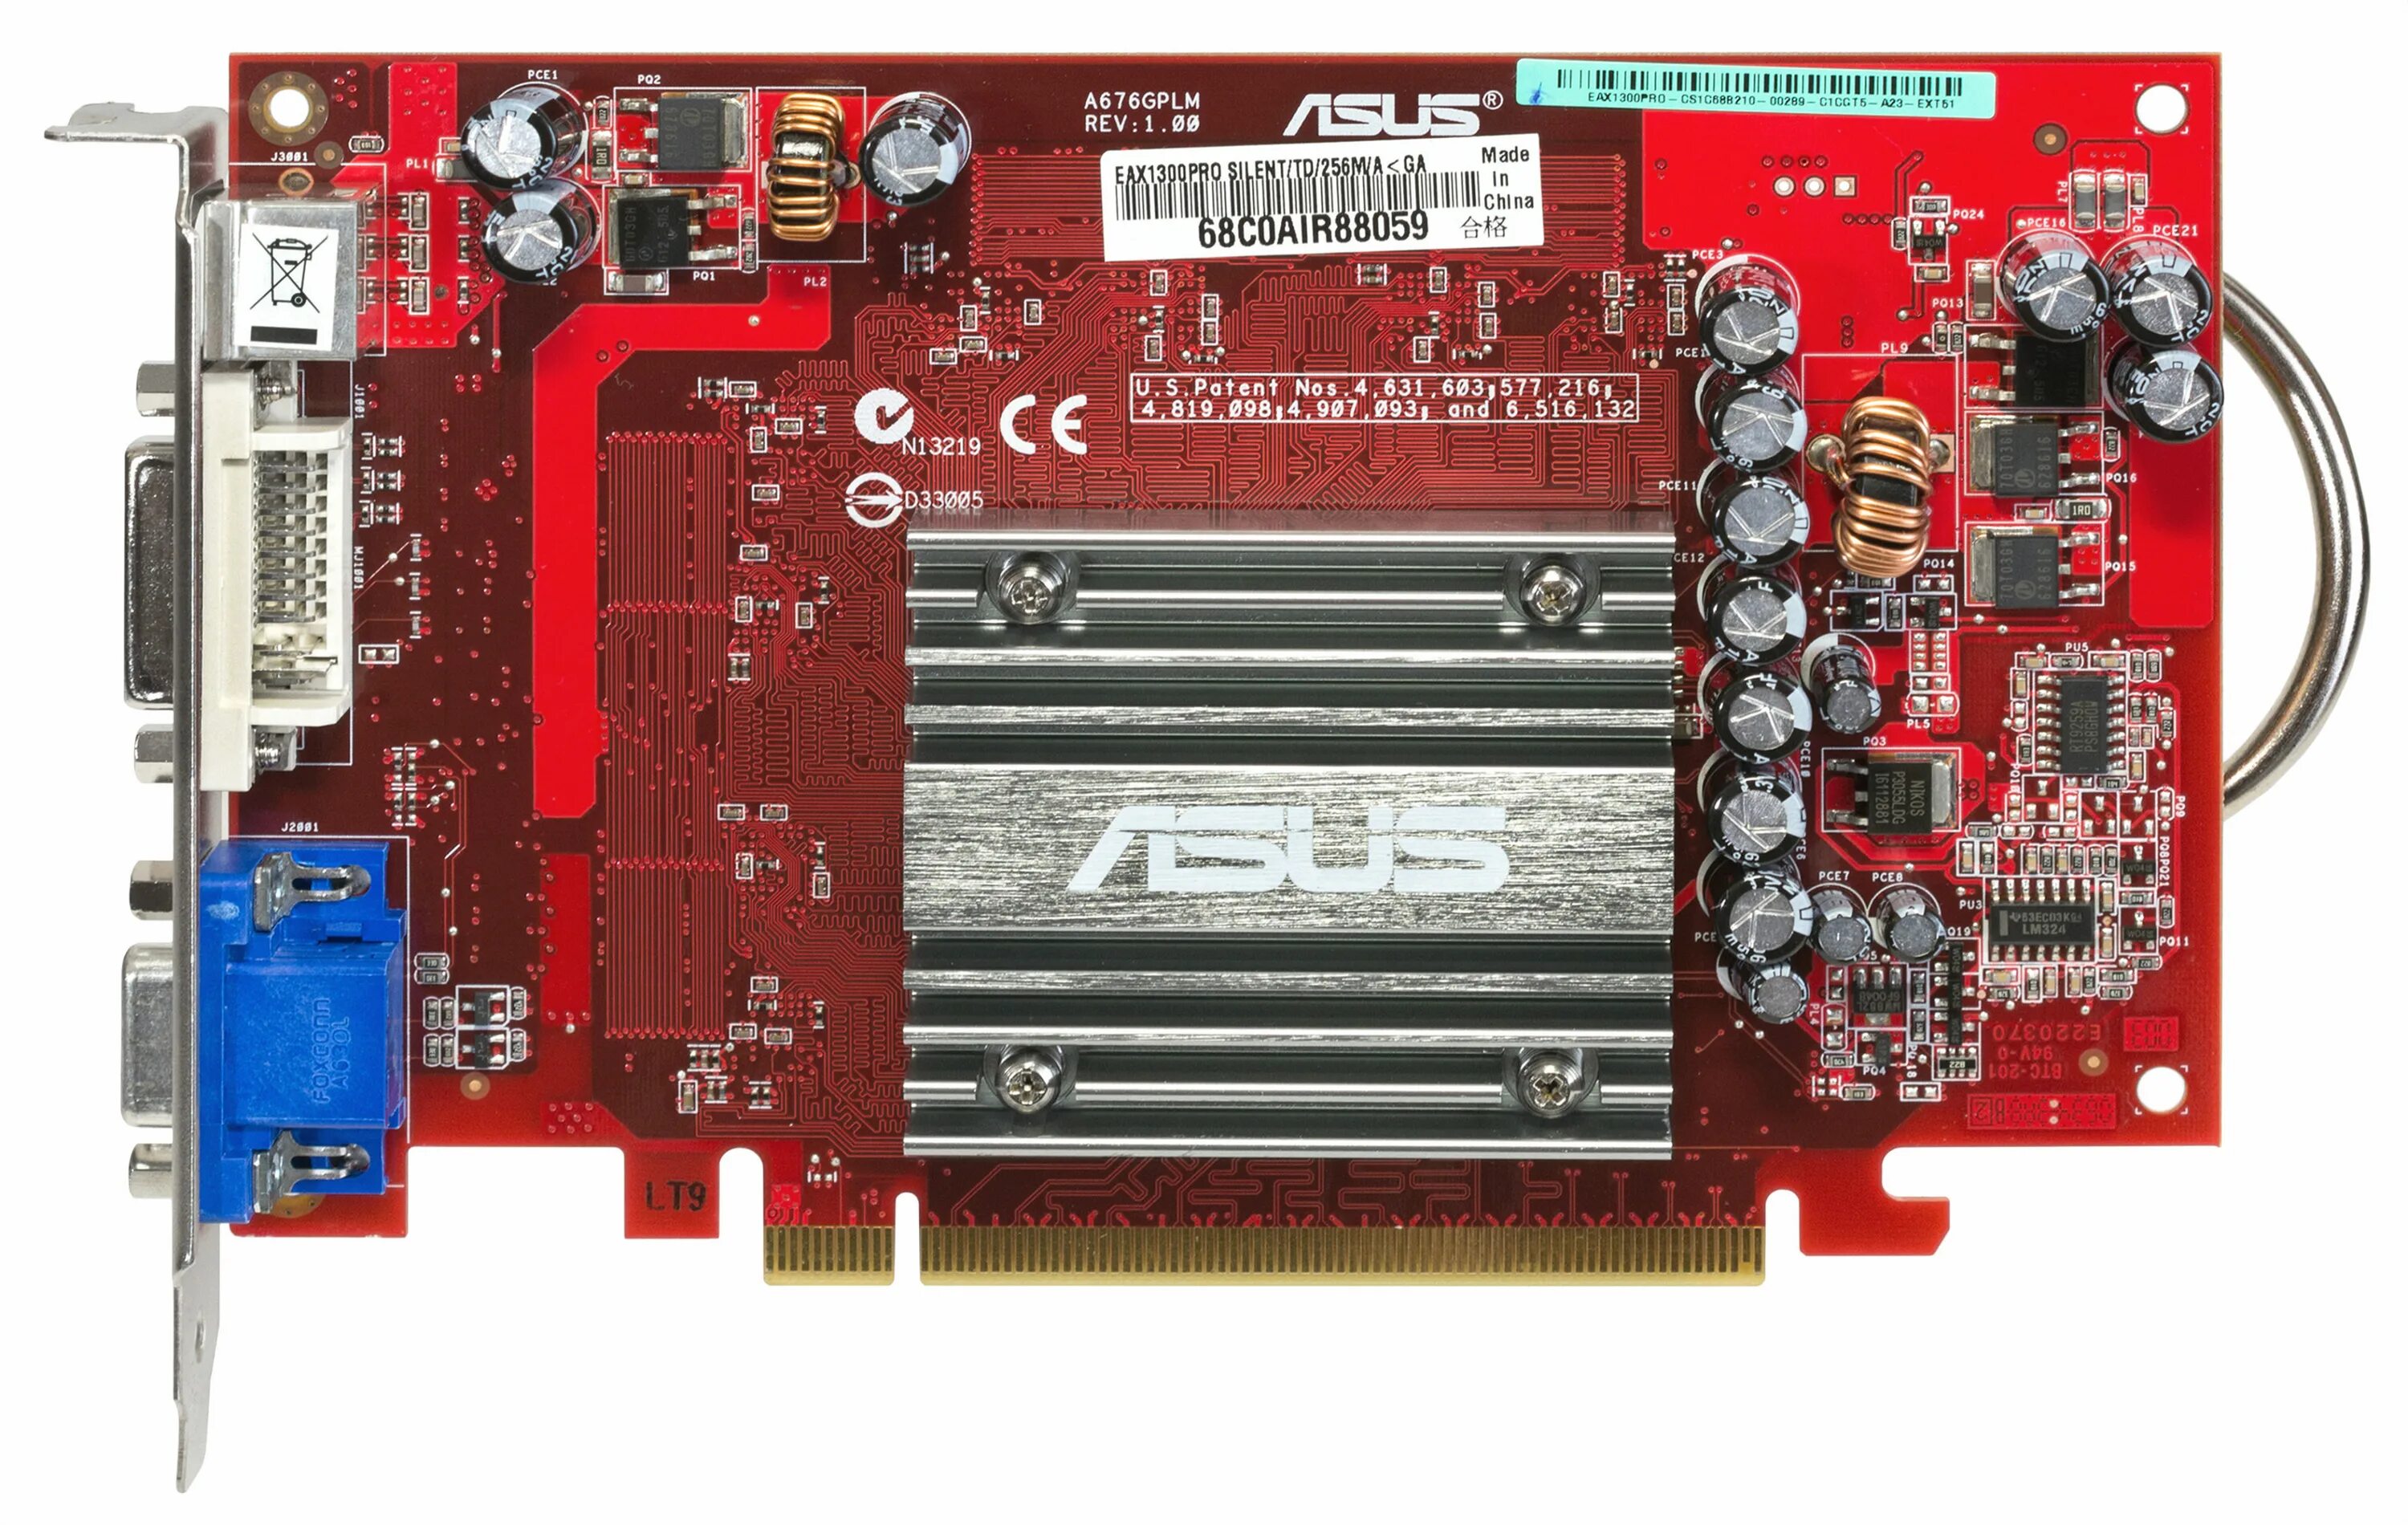 Видеокарта ASUS eax1300pro. Видеокарта Radeon x1300 Pro. Видеокарта ATI Radeon x1300. Видеокарта ASUS Rev 1.00.